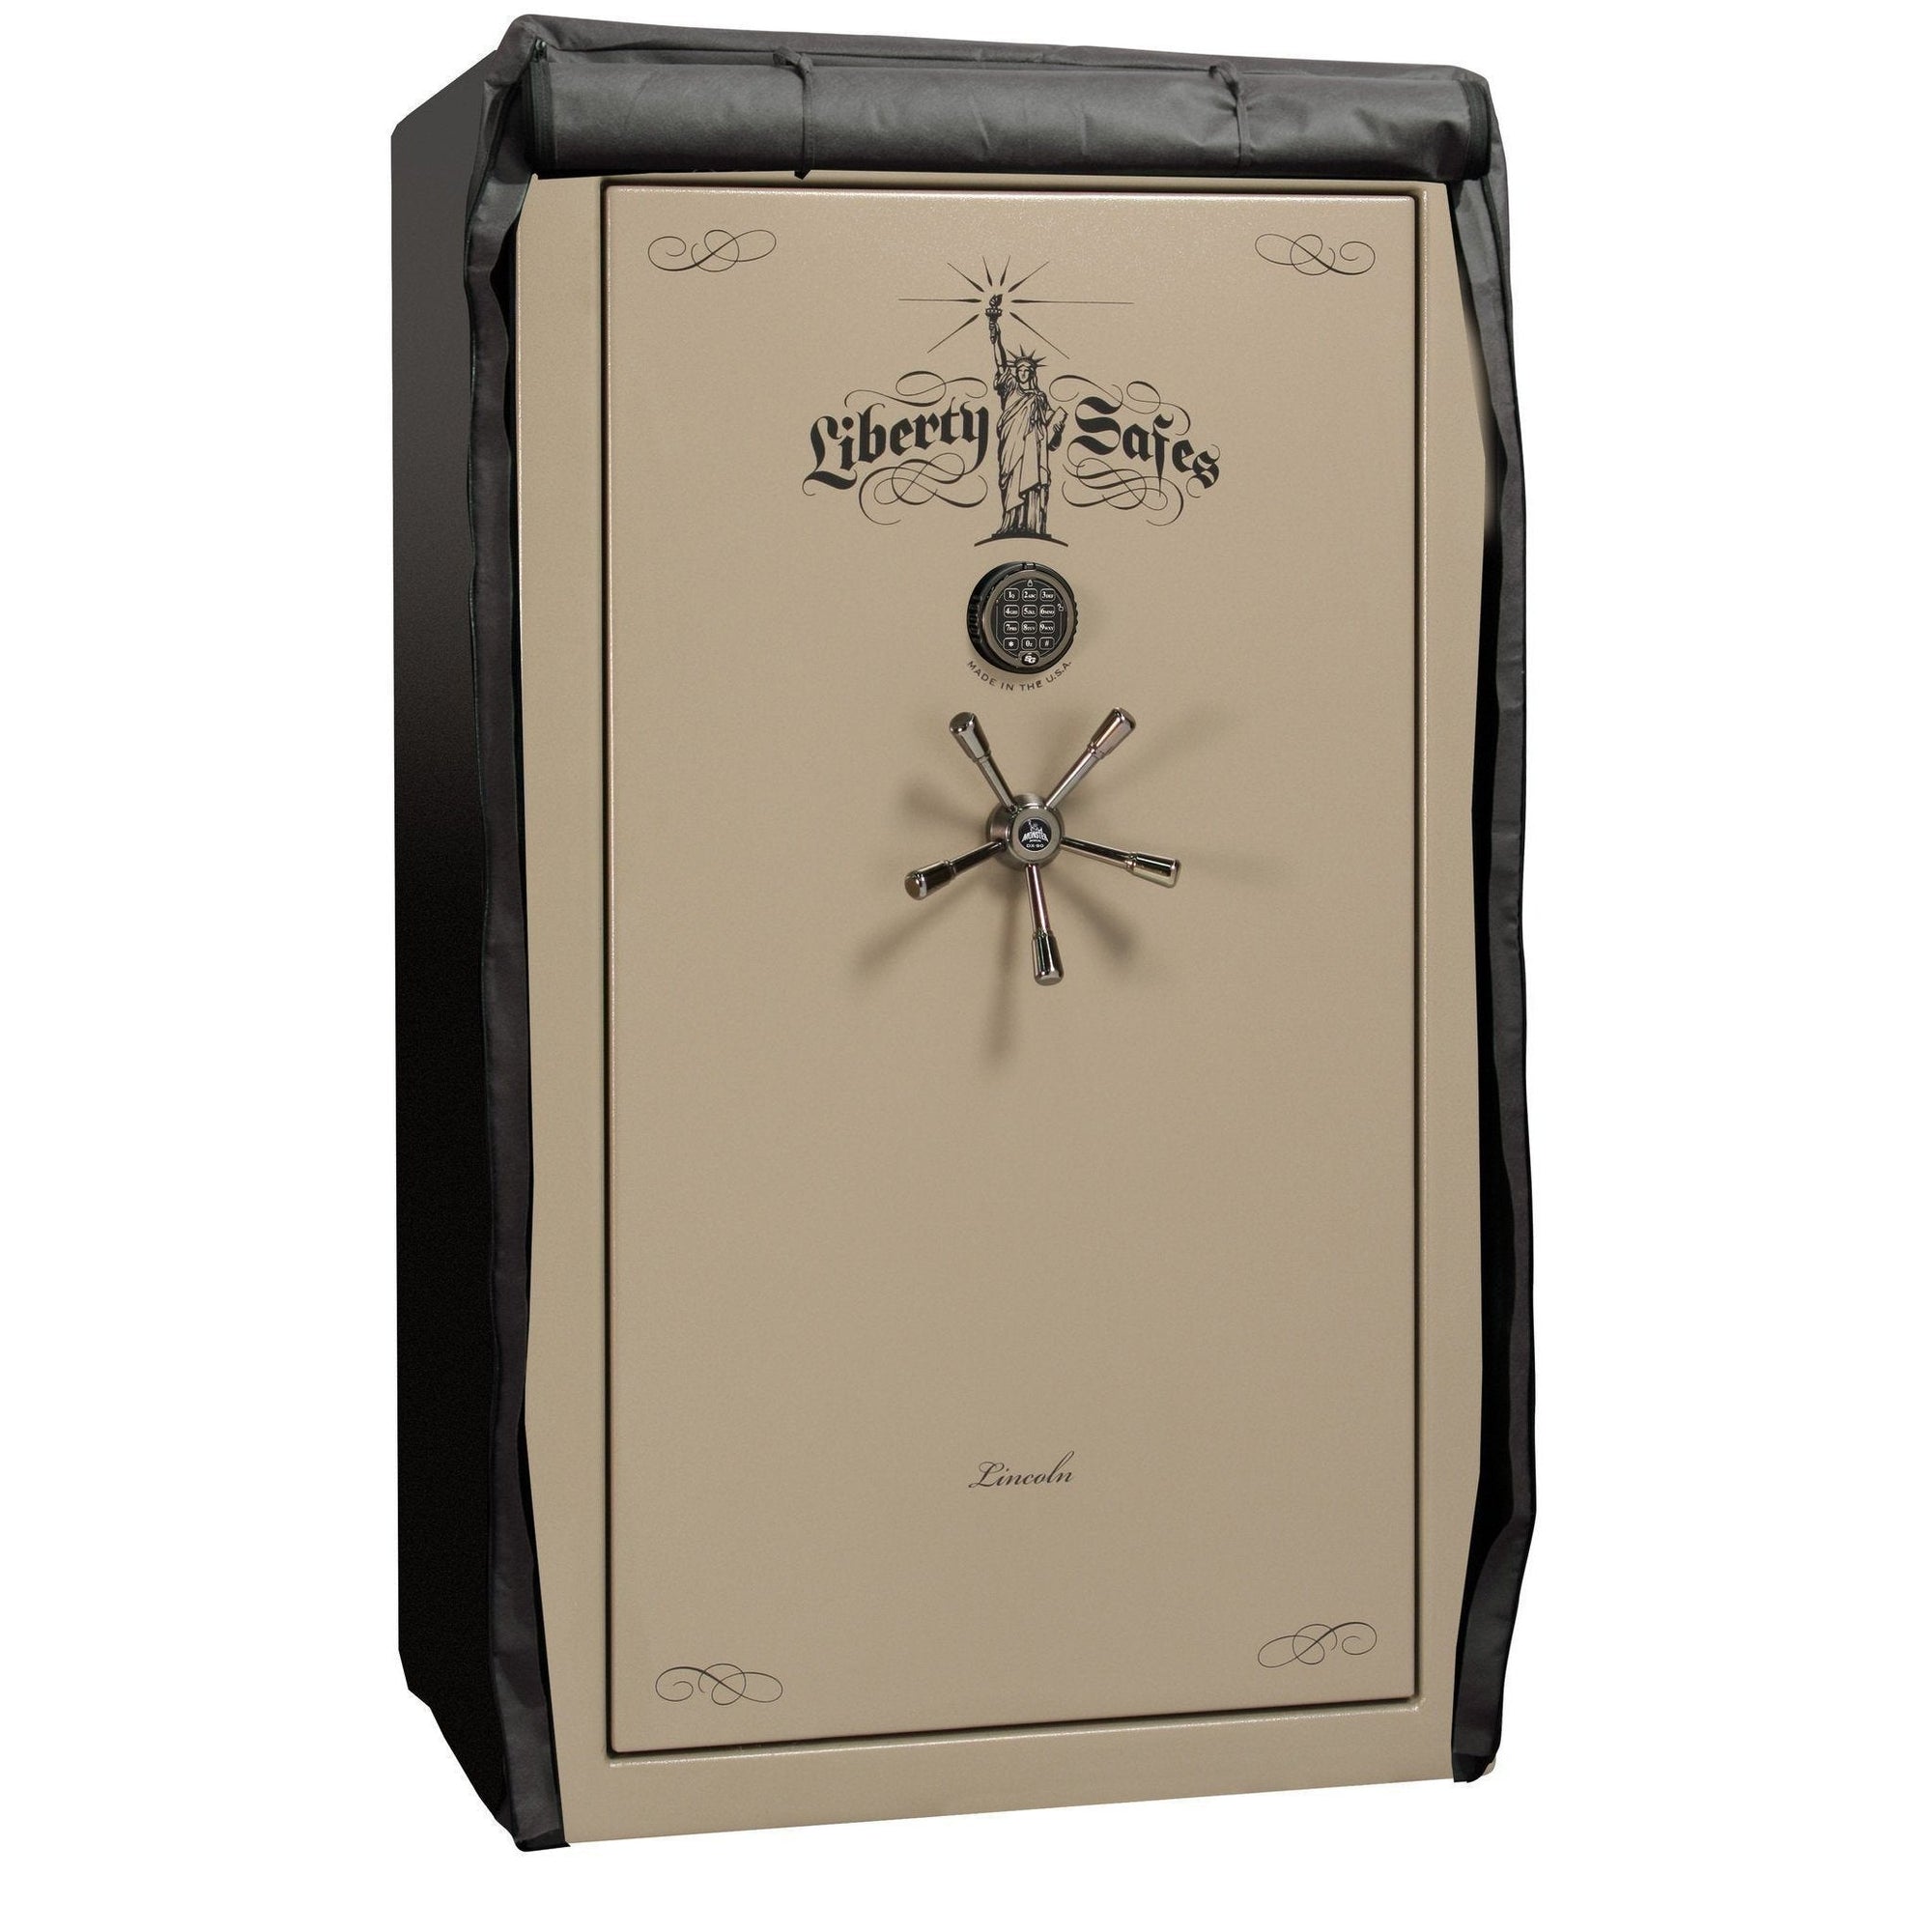 Accessory - security - safe cover - 30-35 size safes - MODLOCK